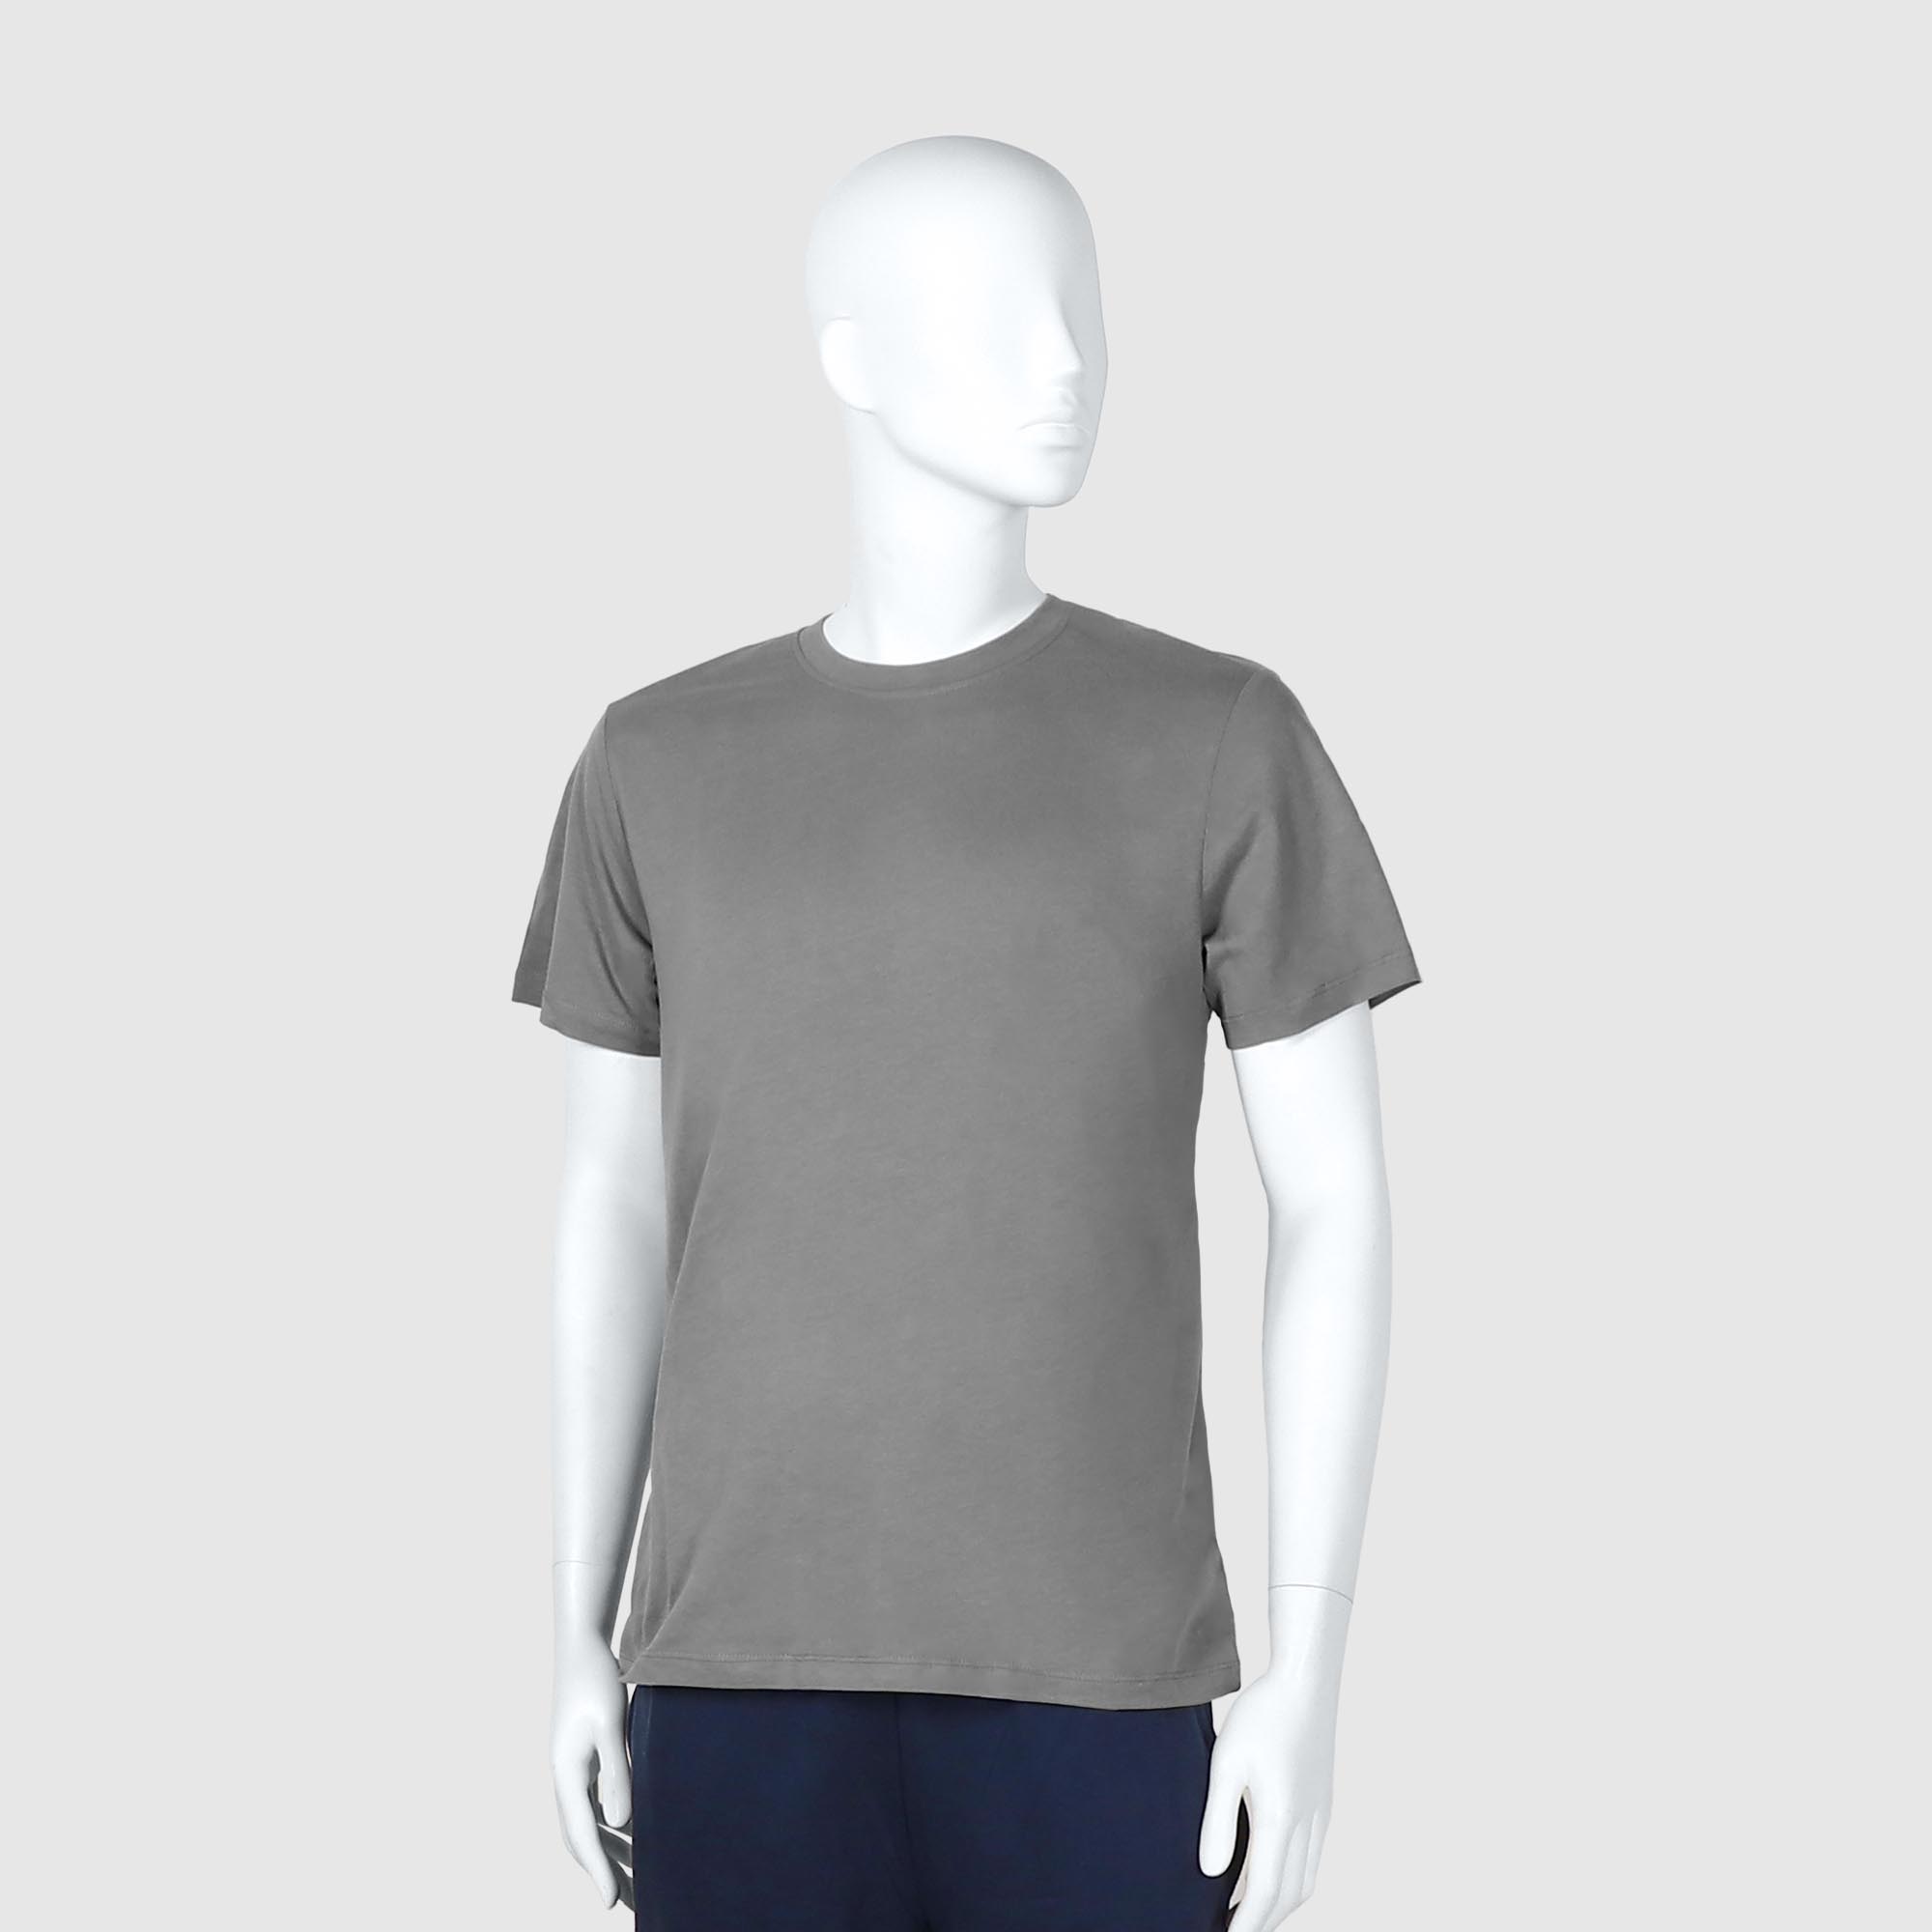 Мужская футболка Diva Teks серая (DTD-04), цвет серый, размер 46-48 - фото 1